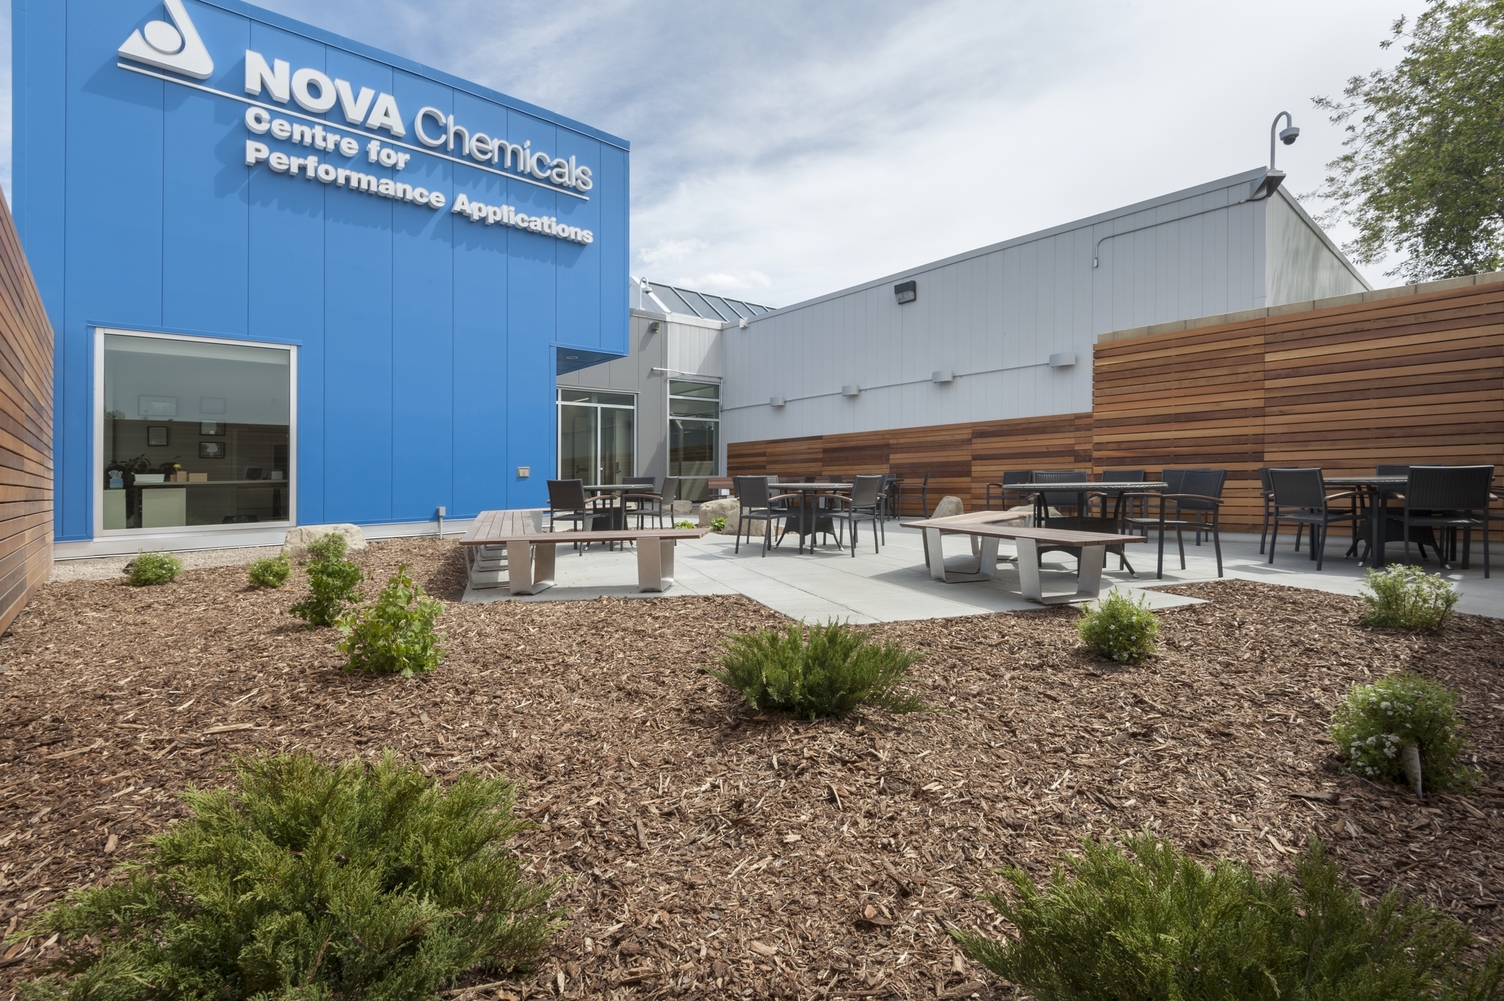 NOVA Chemicals Centre for Performance Applications